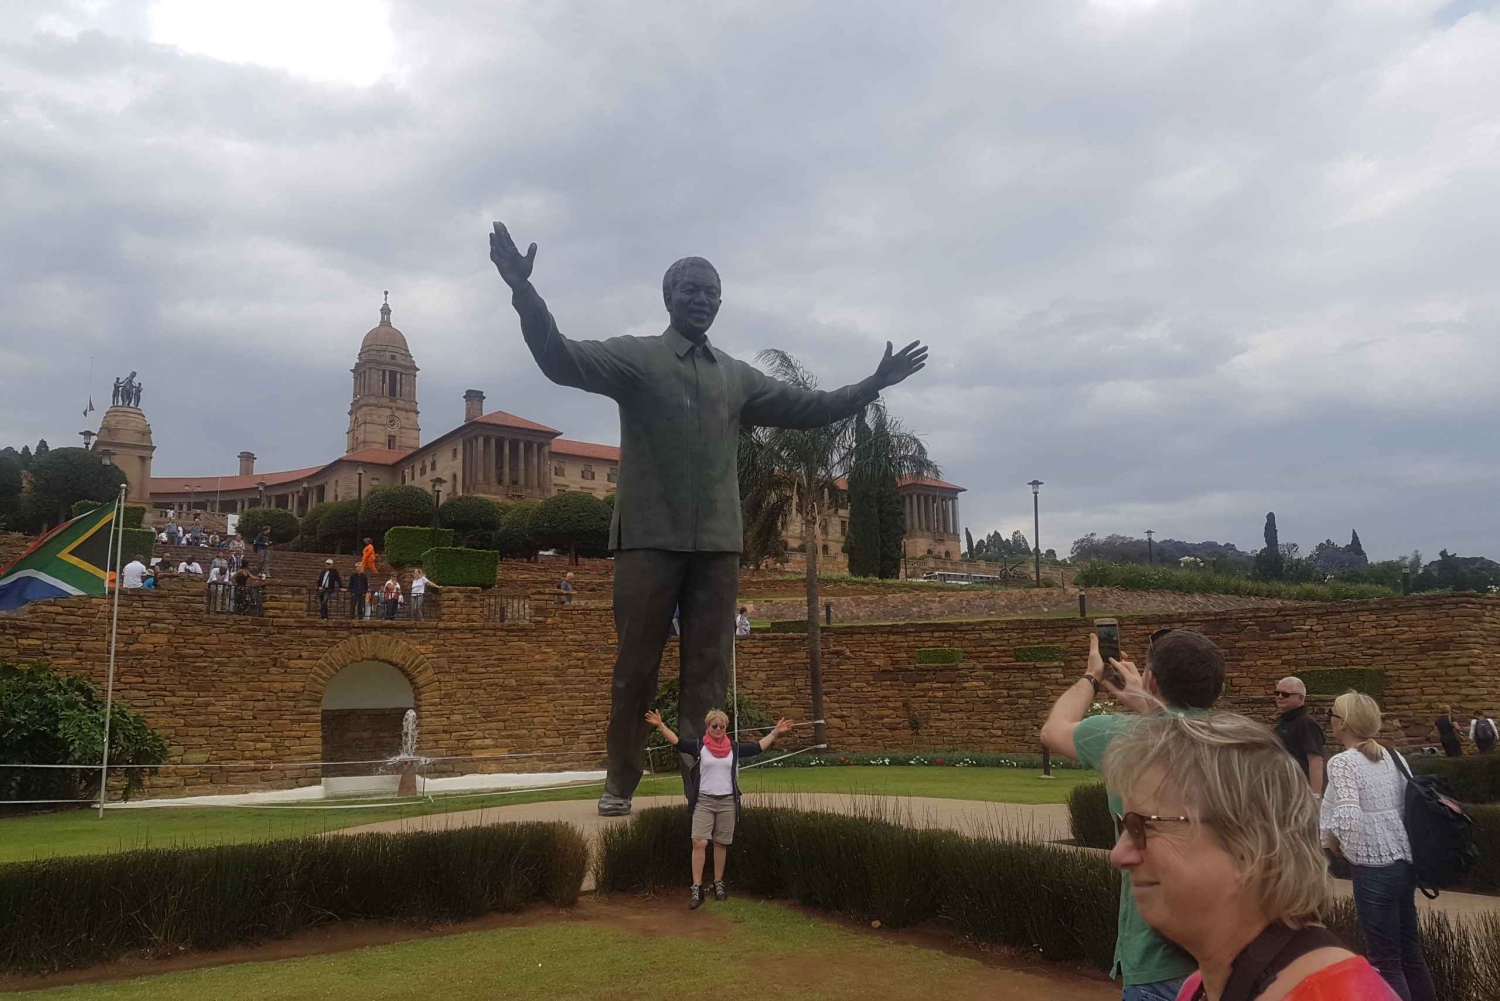 From Johannesburg: Pretoria Half Day Tour